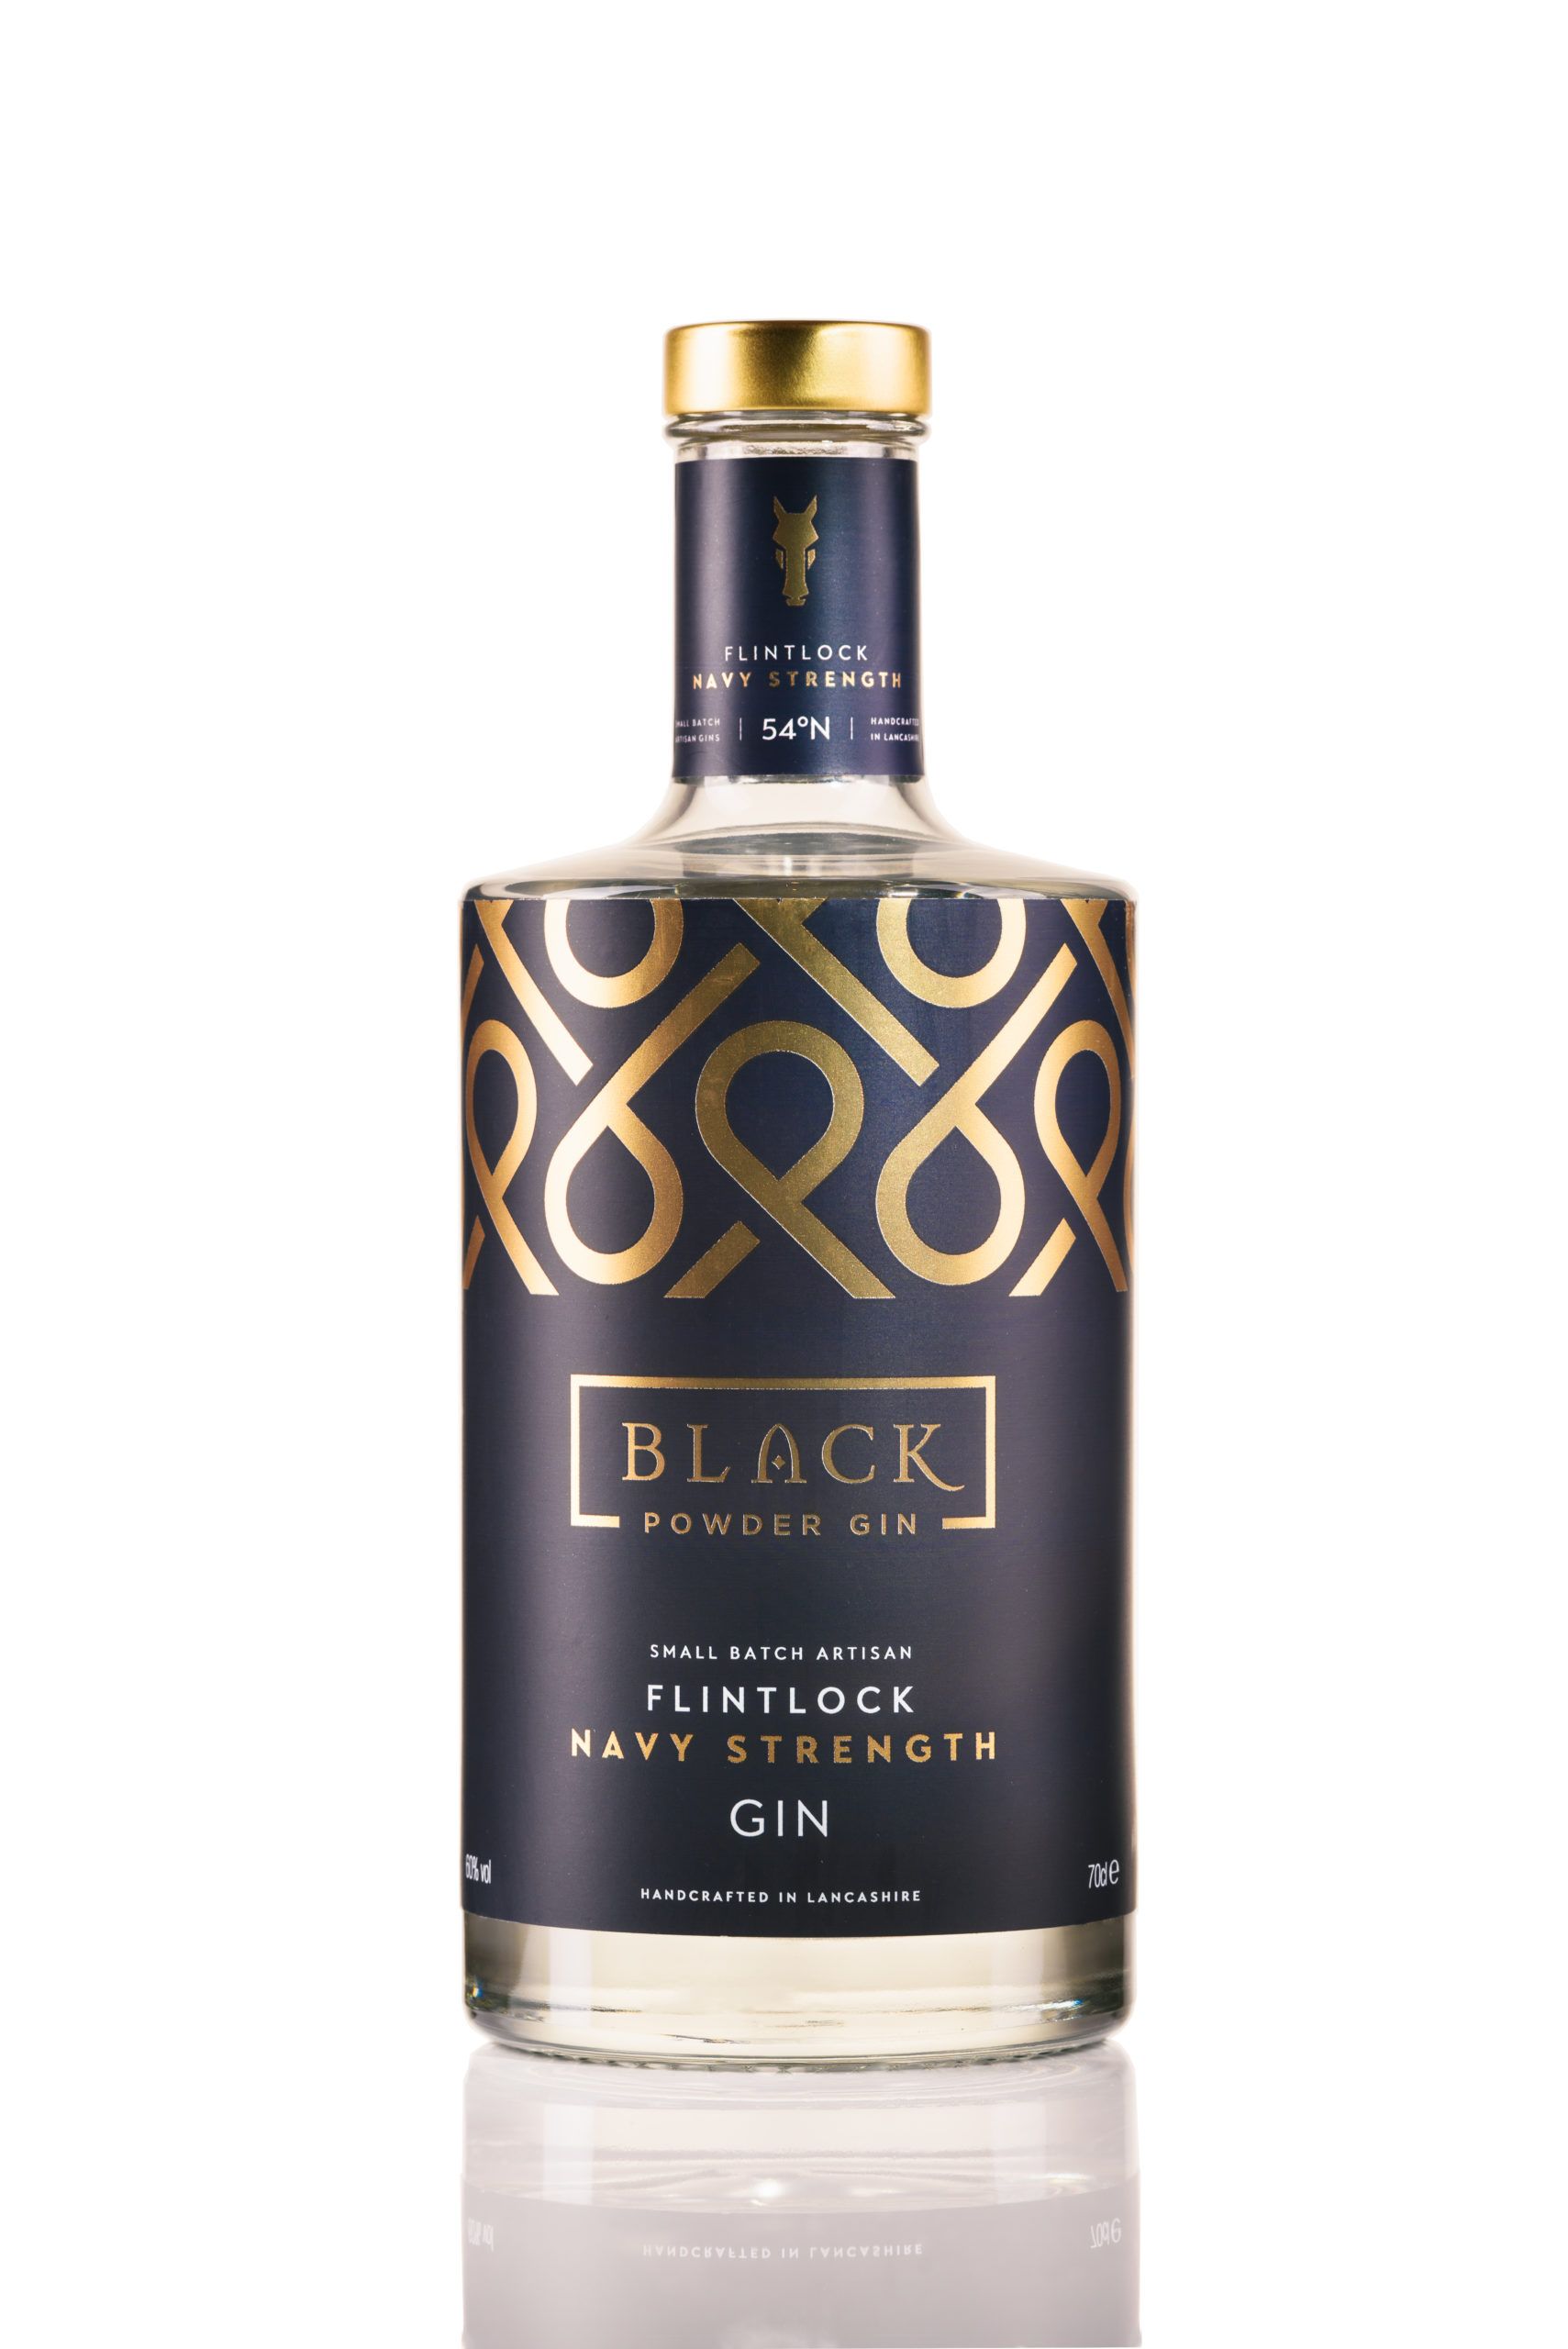 Black Powder Gin – Flintlock Navy Strength Gin | The Gin To My Tonic